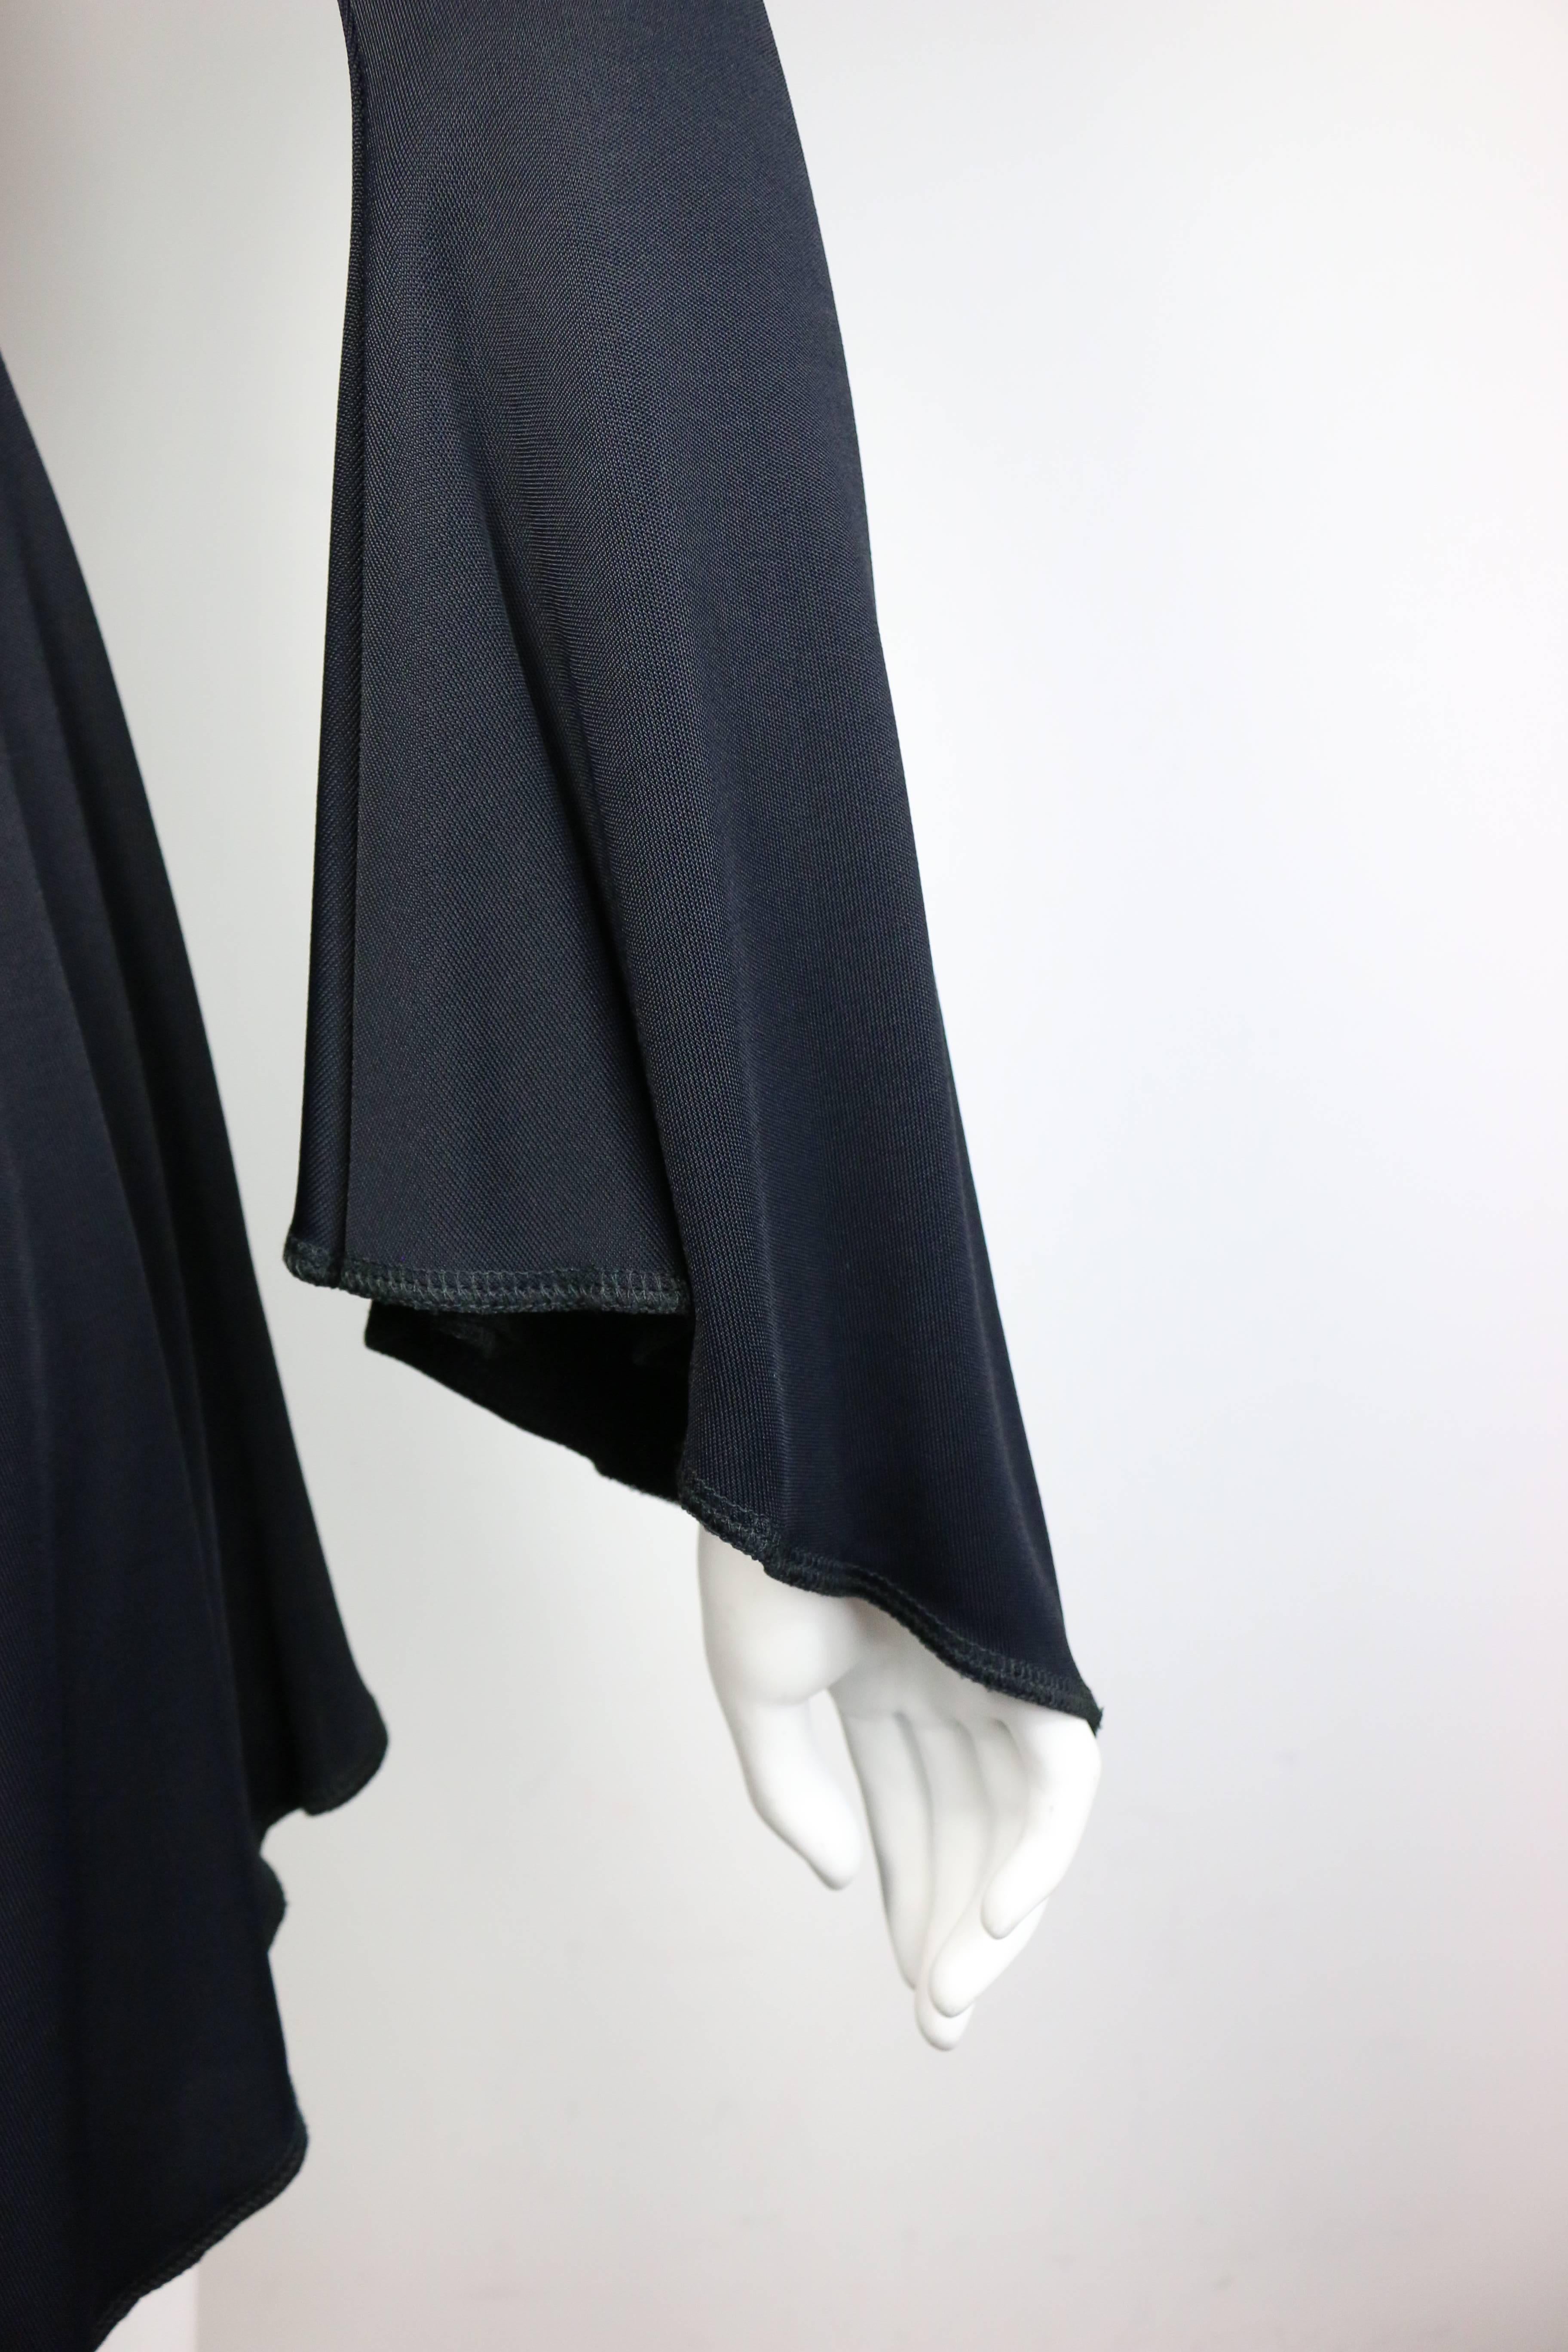 Moschino Couture - Cardigan mi-long noir en vente 2